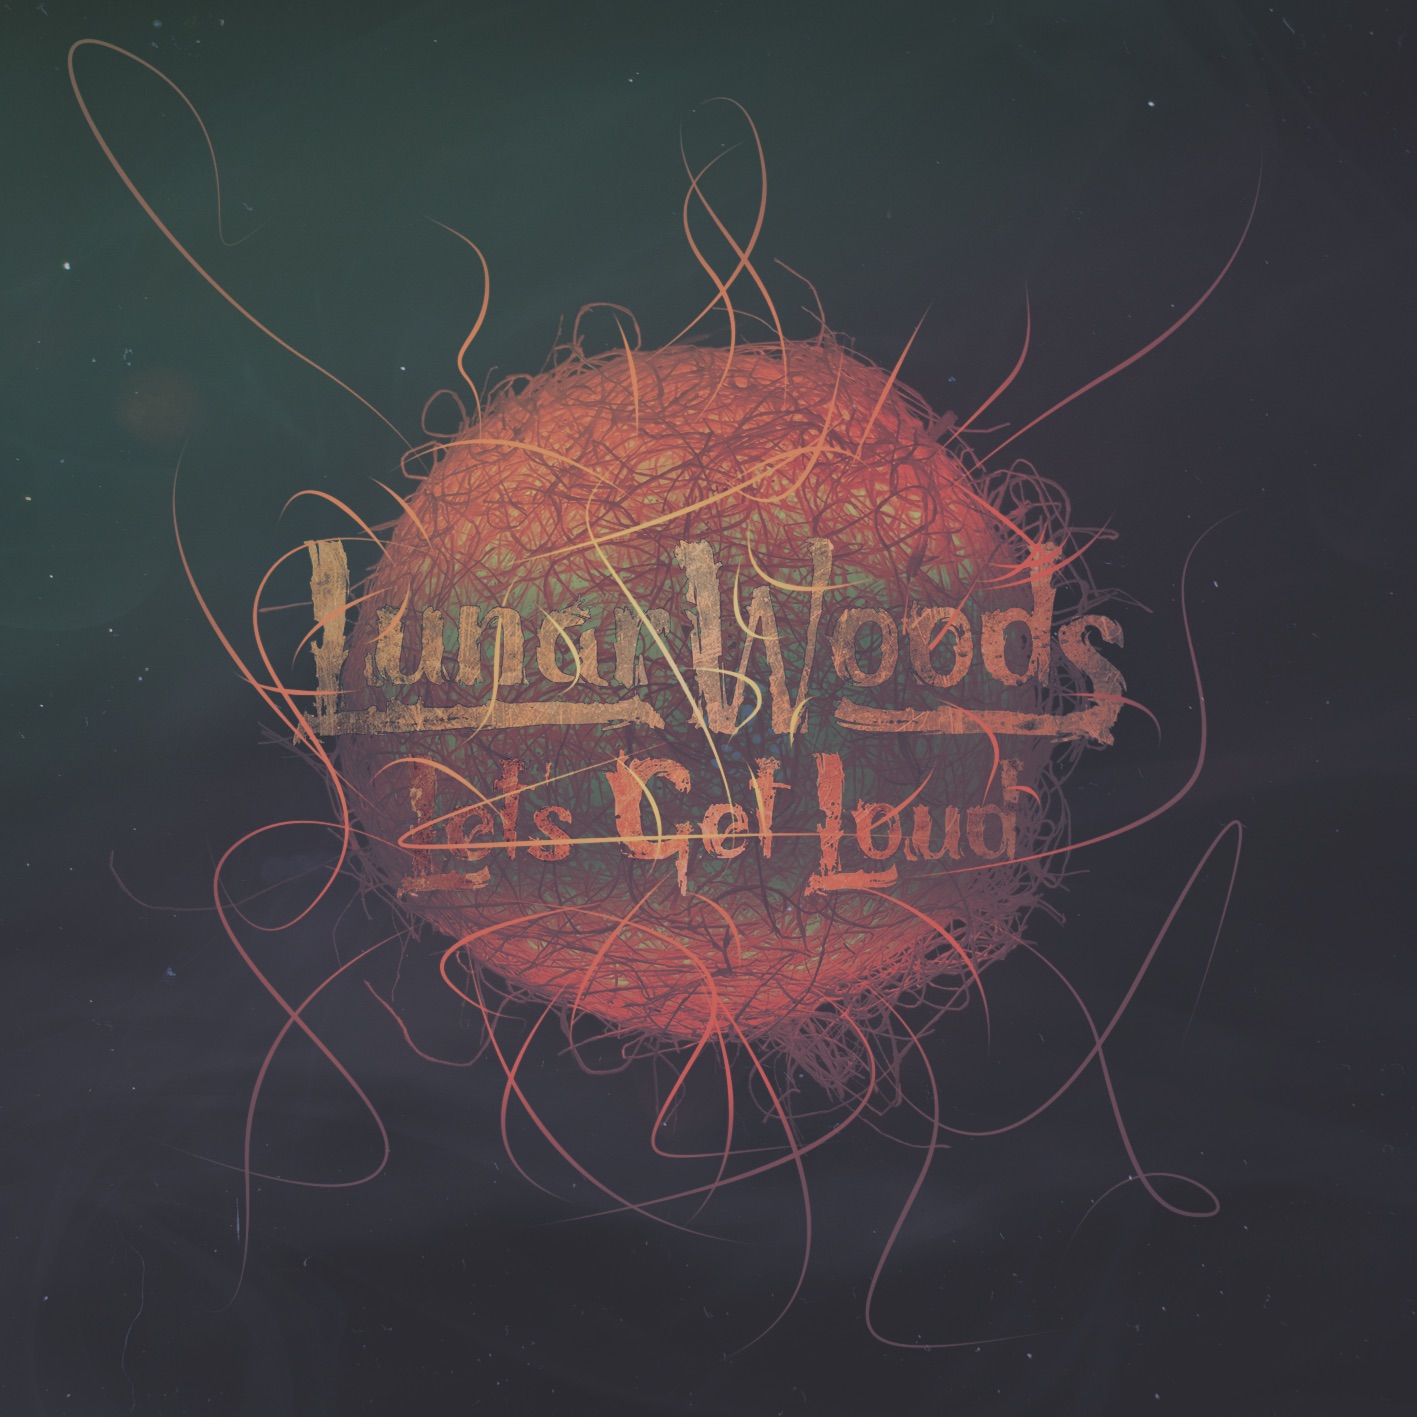  Lunar Woods – Let’s Get Loud